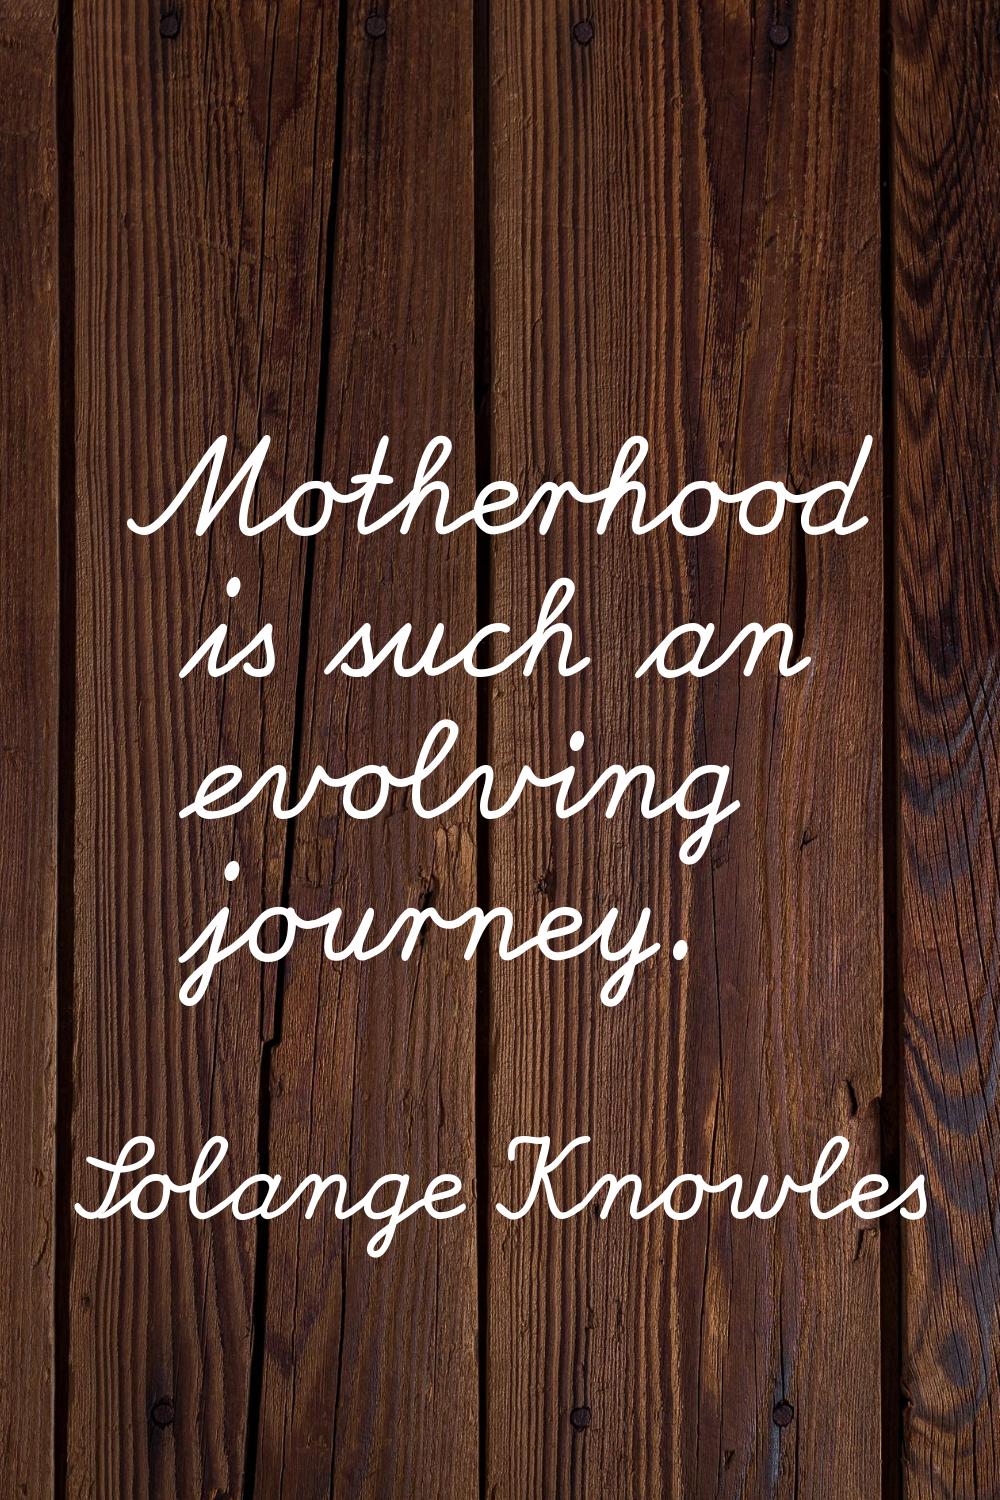 Motherhood is such an evolving journey.